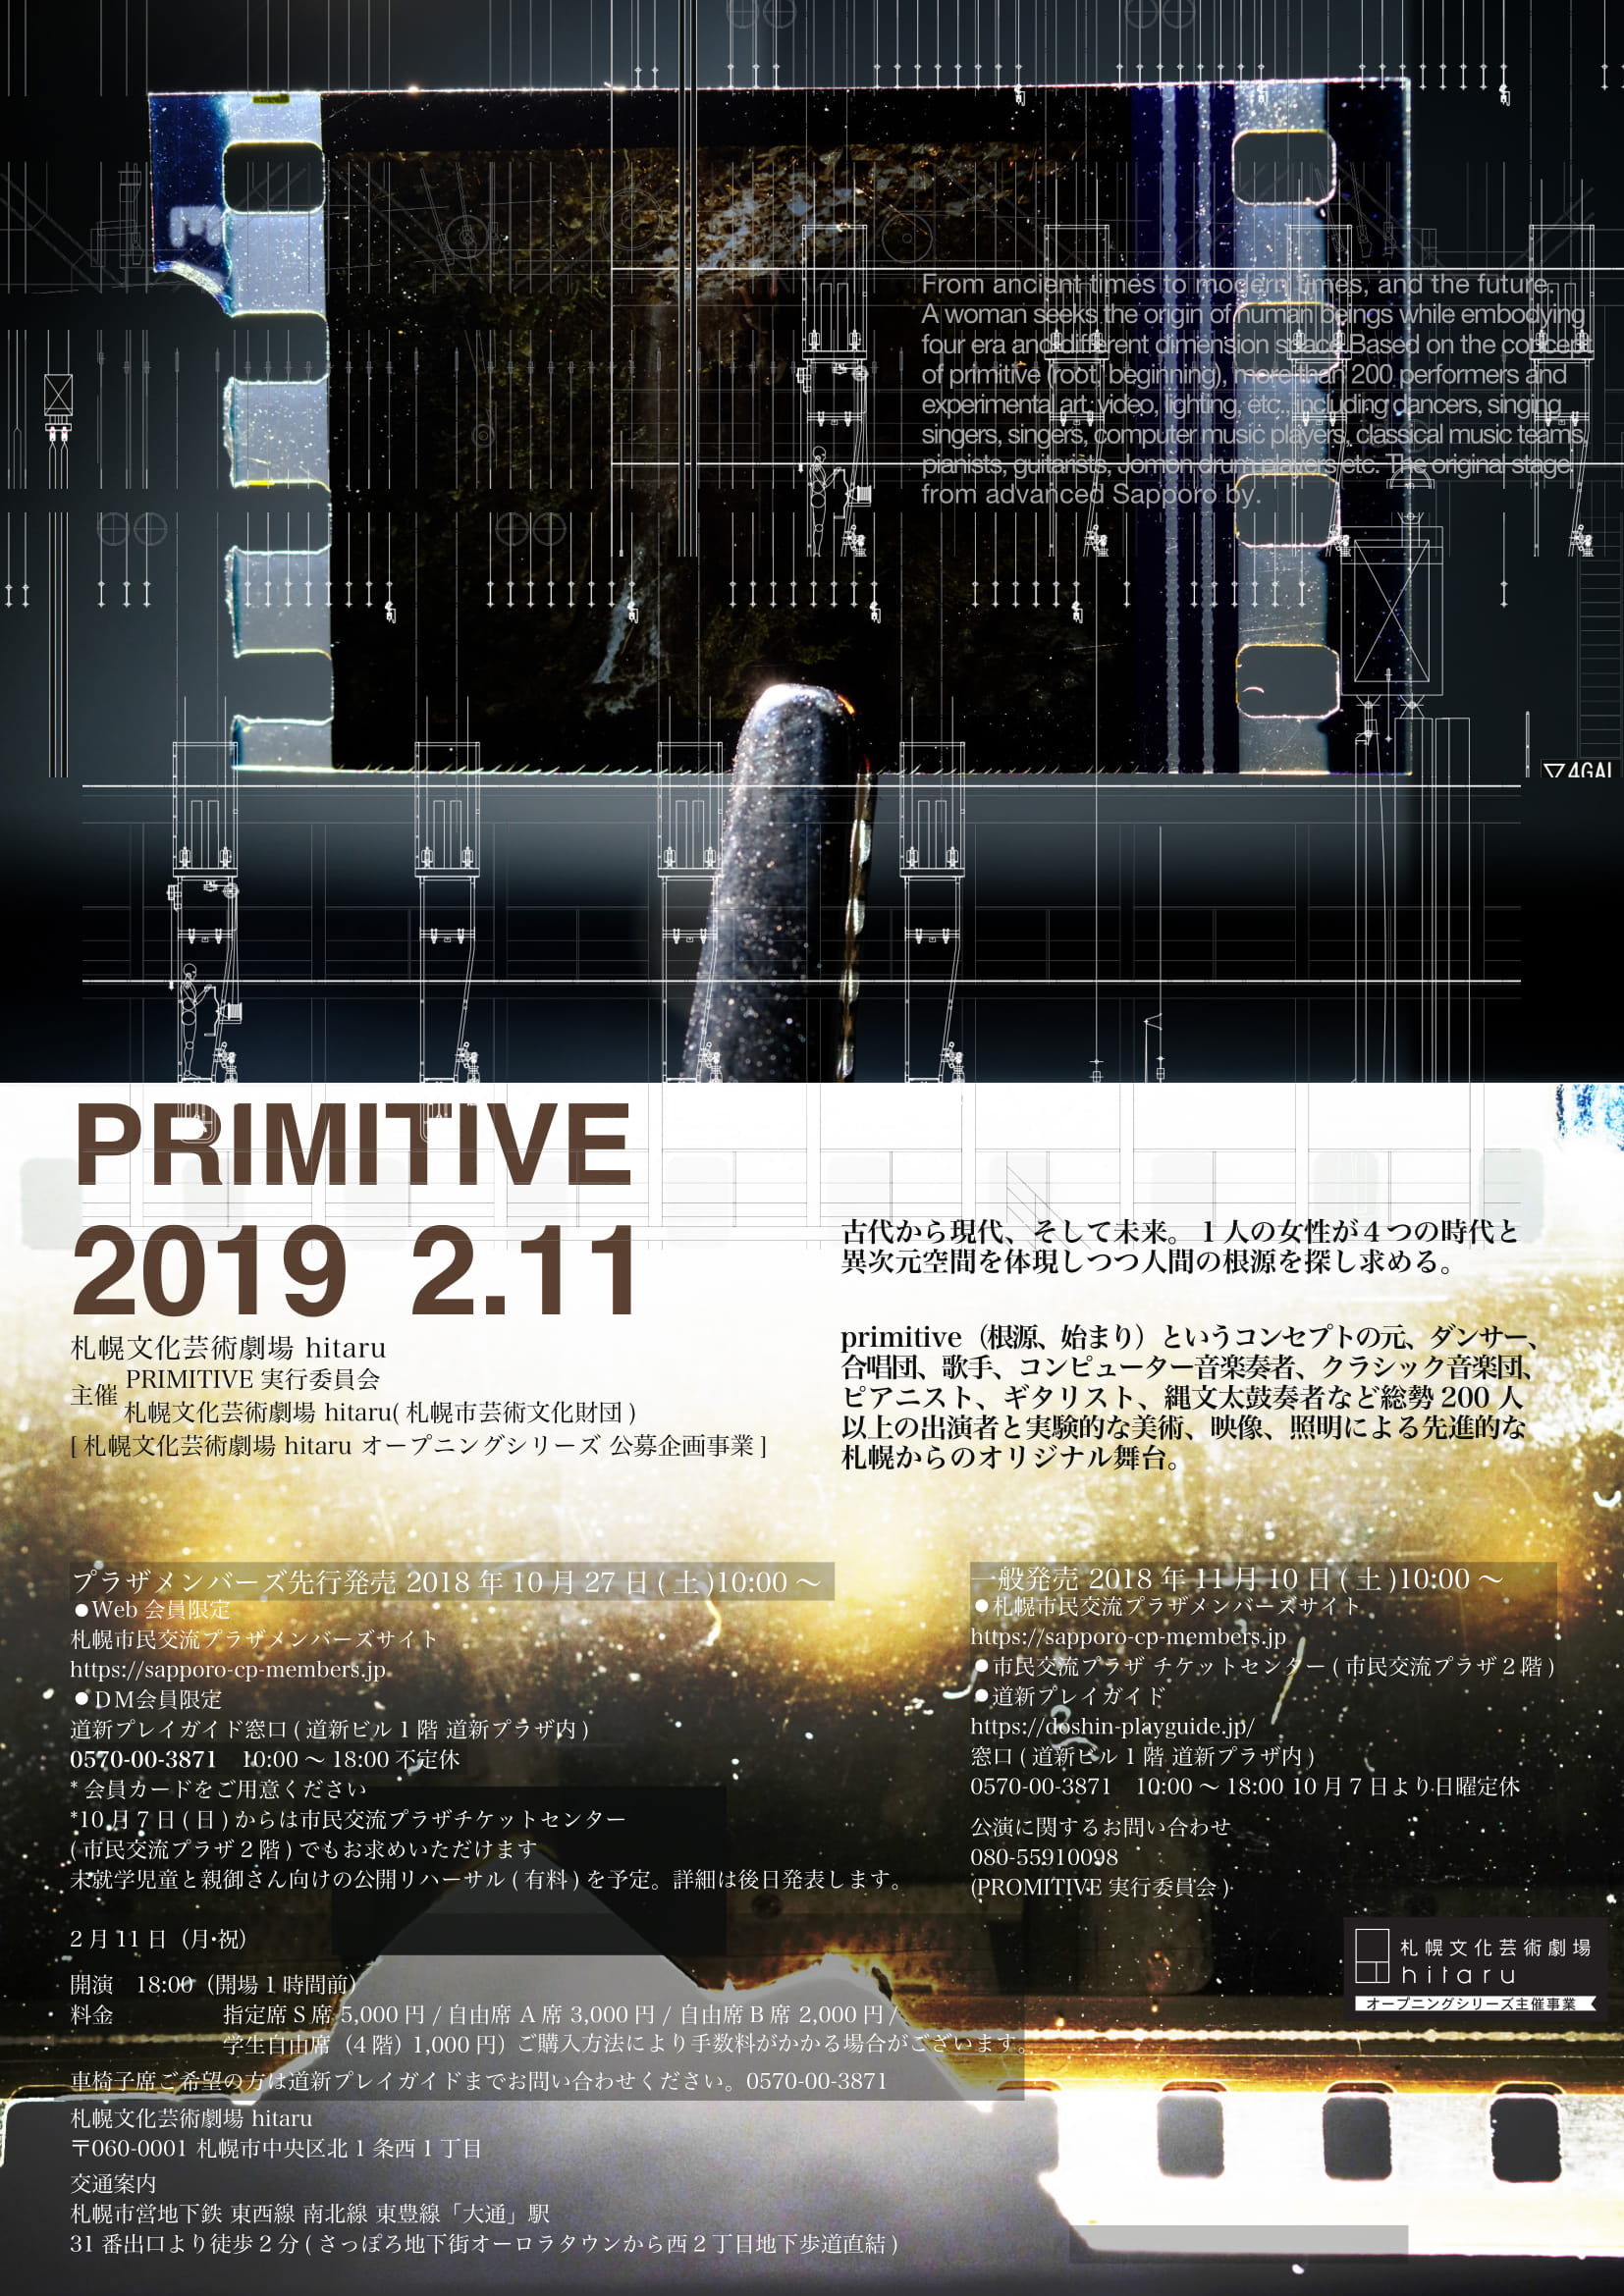 【公募企画事業】PRIMITIVE実行委員会「PRIMITIVE」公演詳細公開イメージ1枚目